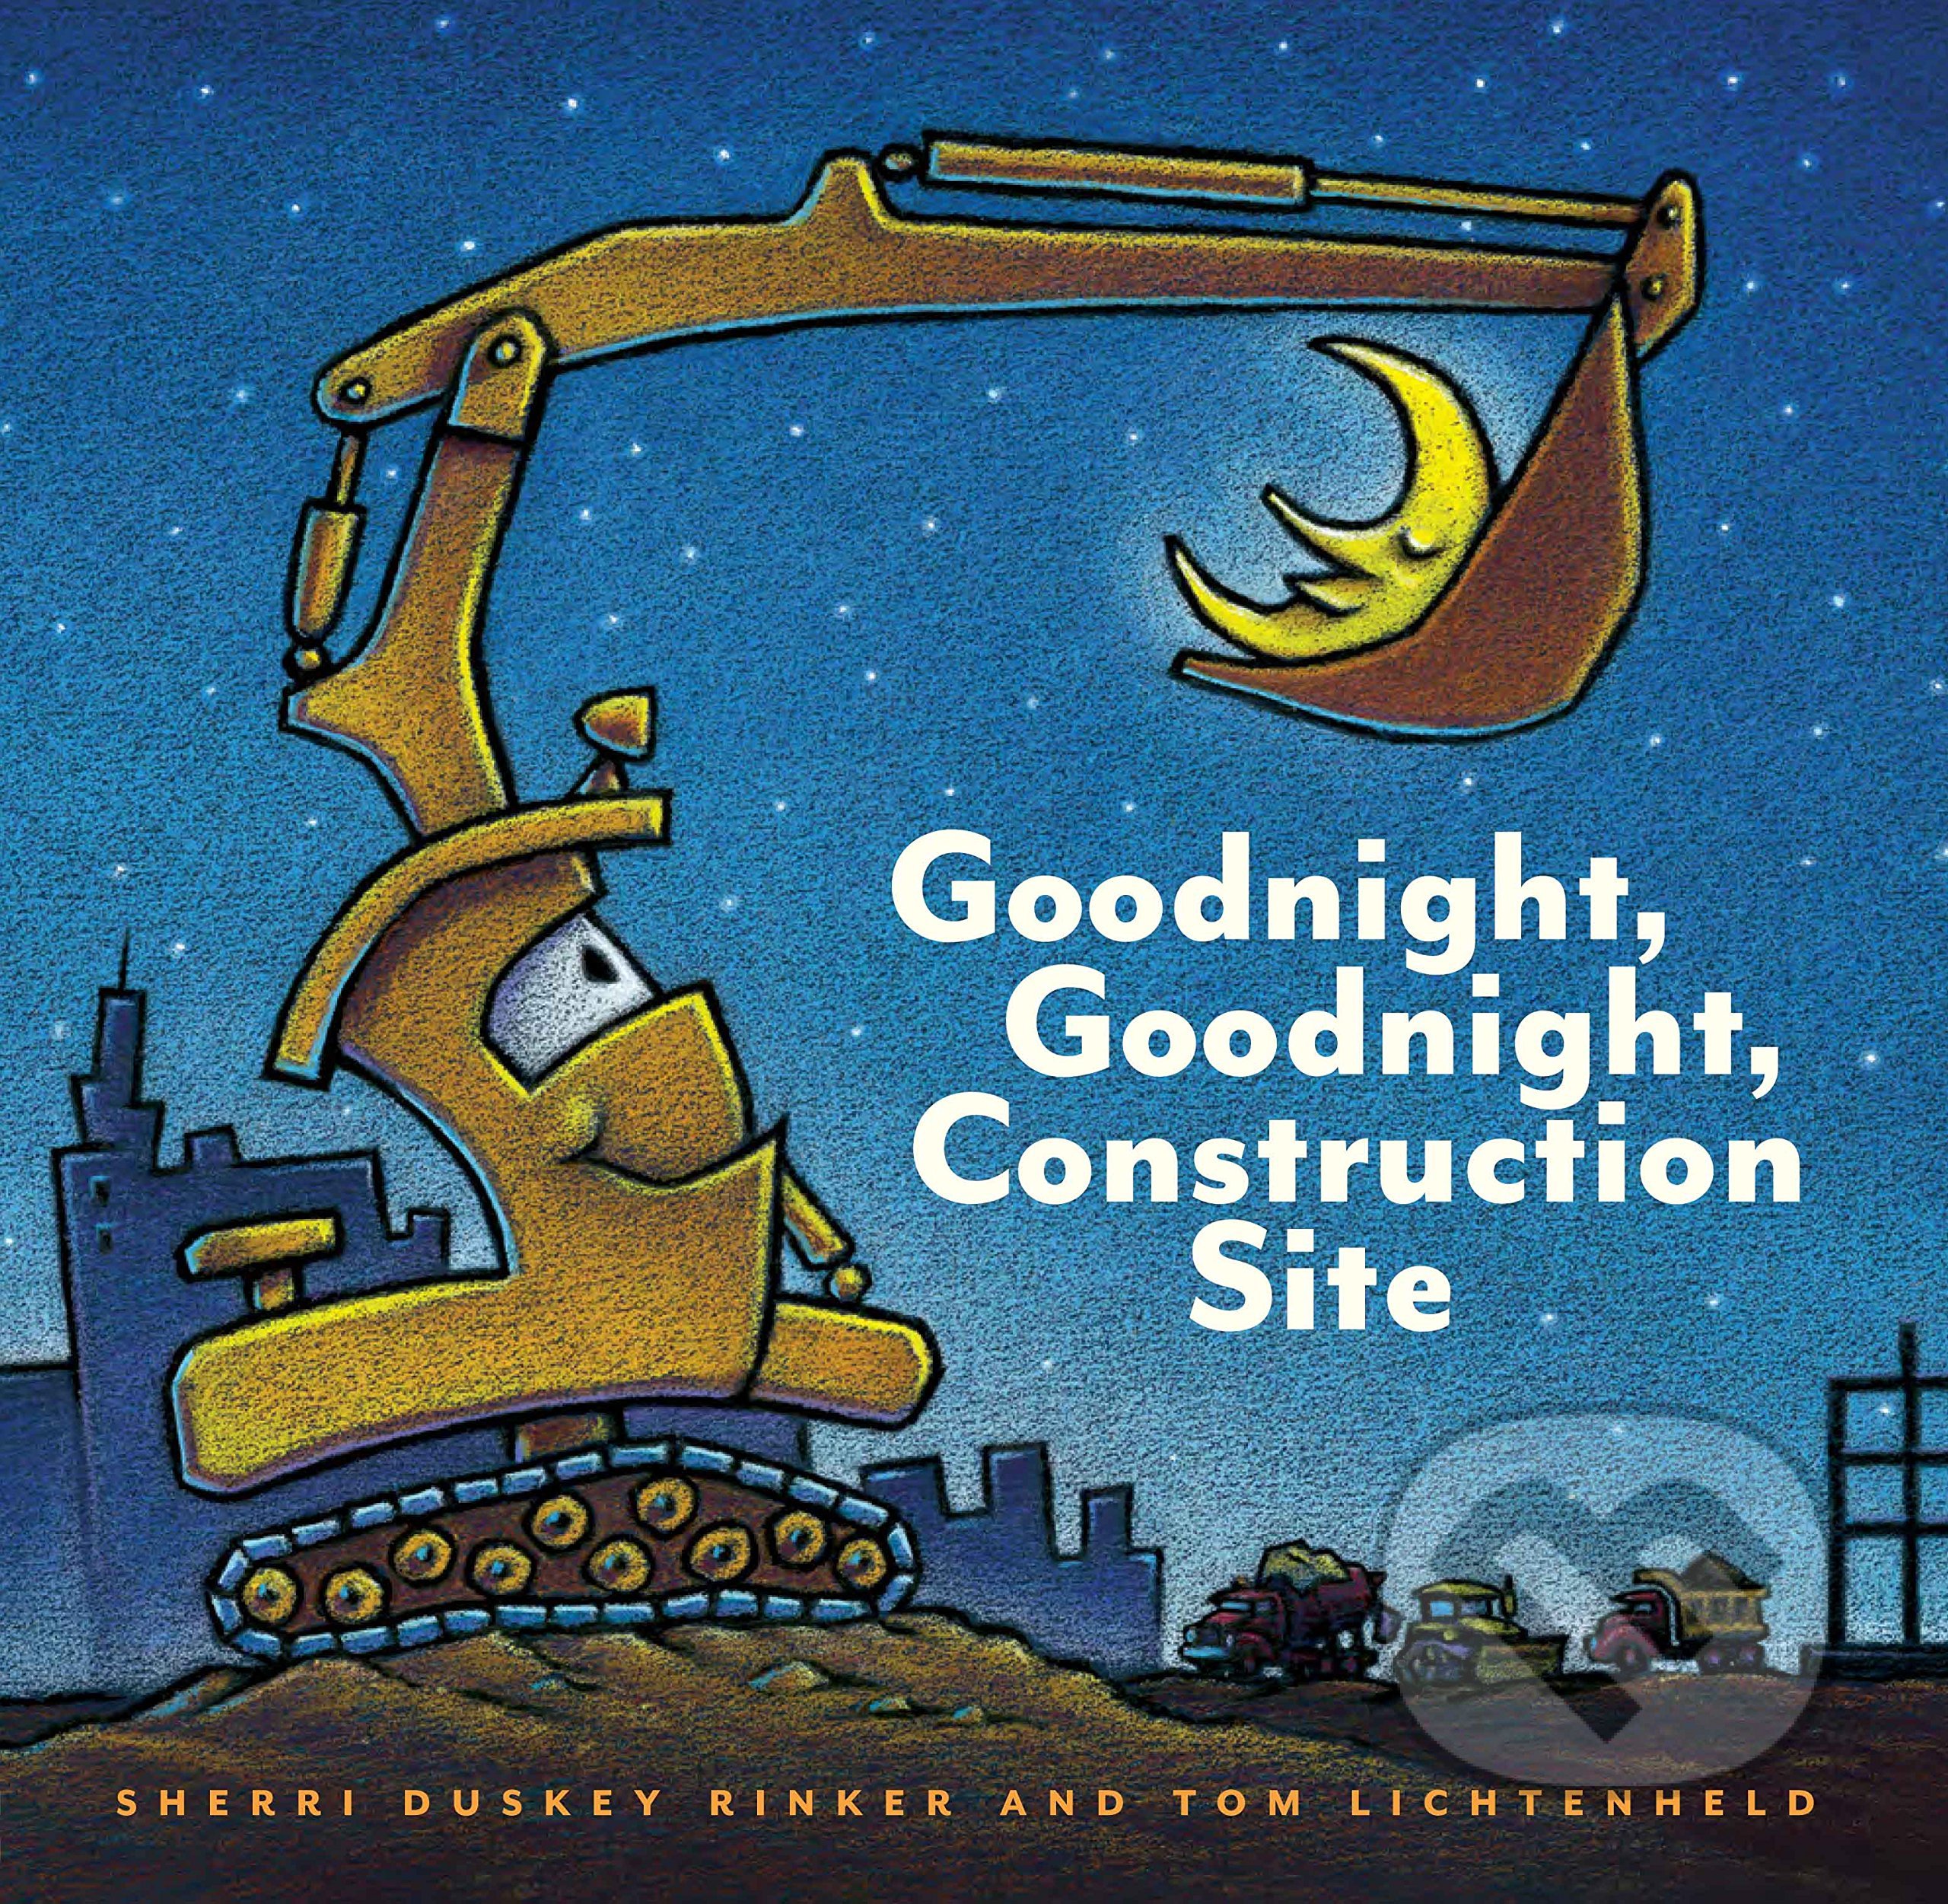 Goodnight, Goodnight Construction Site - Sherri Duskey Rinker, ilustrated by Tom Lichtenheld, Chronicle Books, 2011